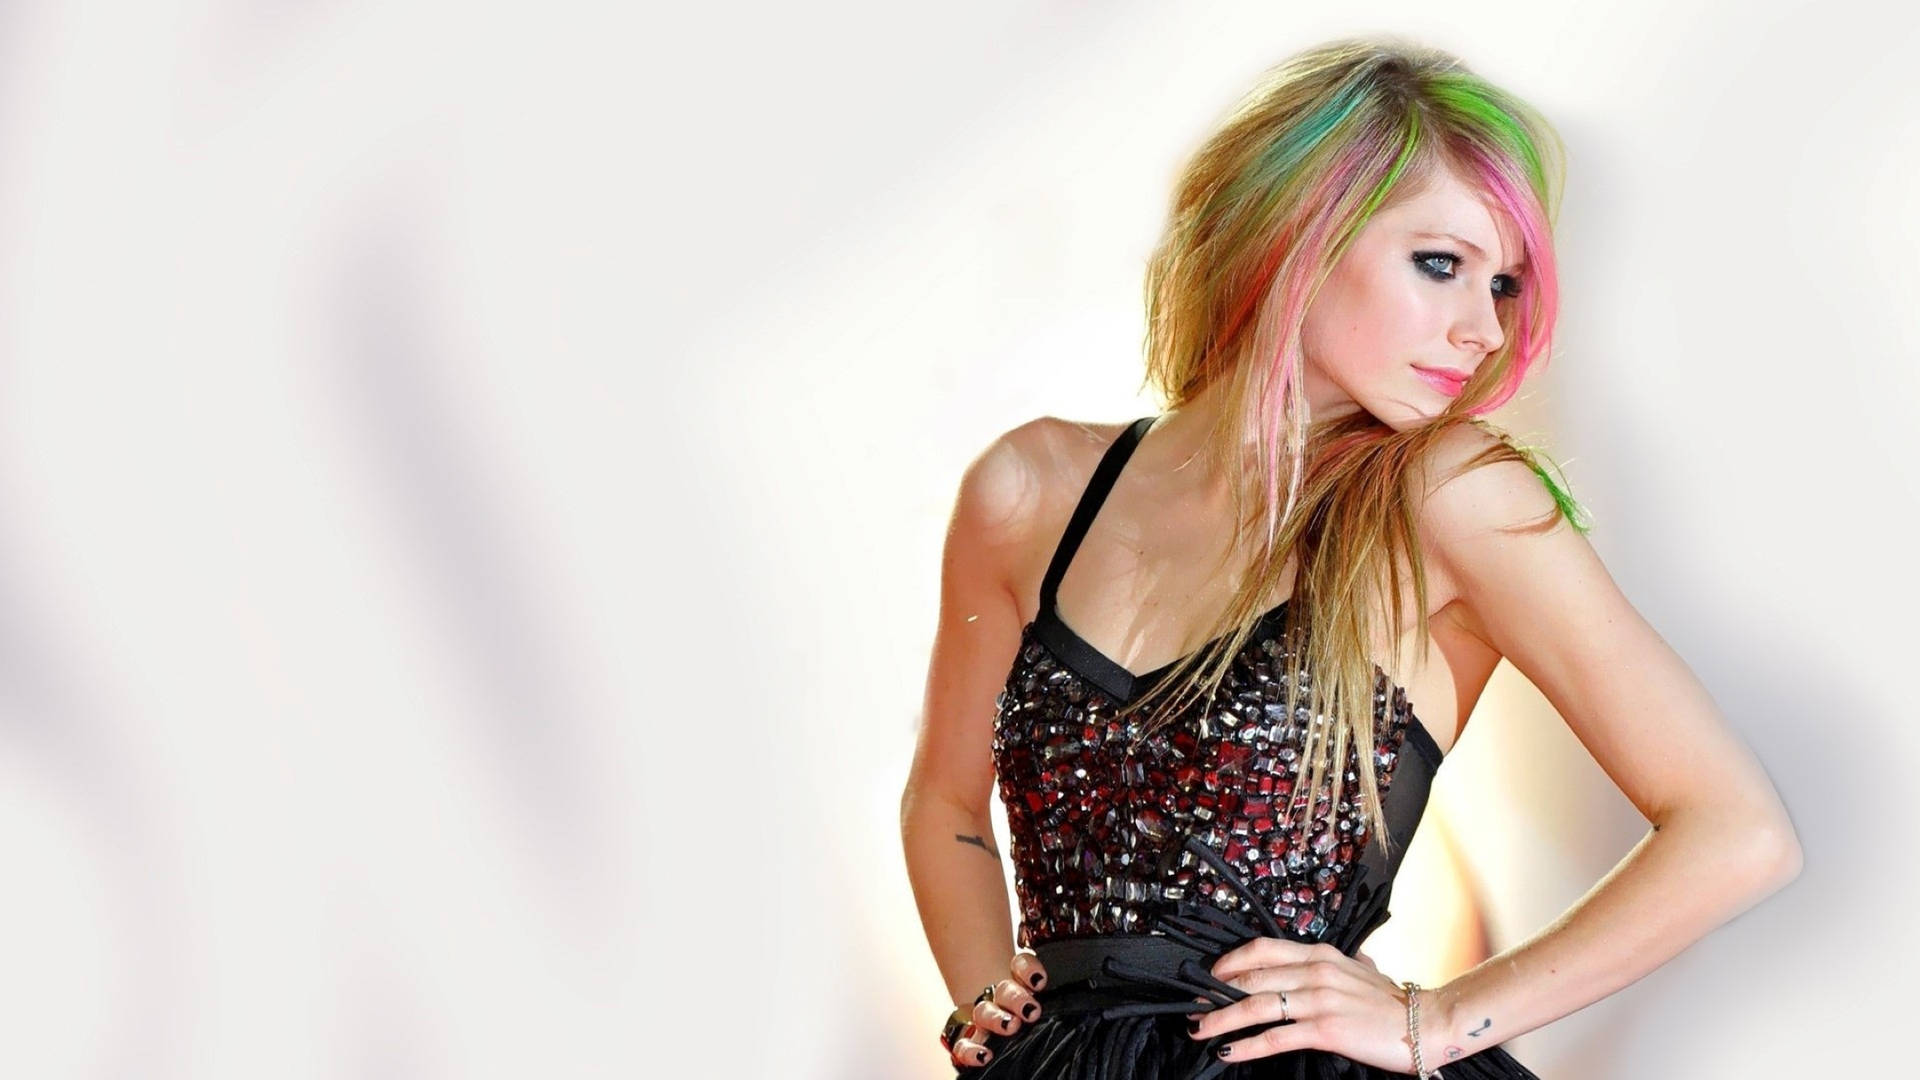 Colored-hair Avril Lavigne